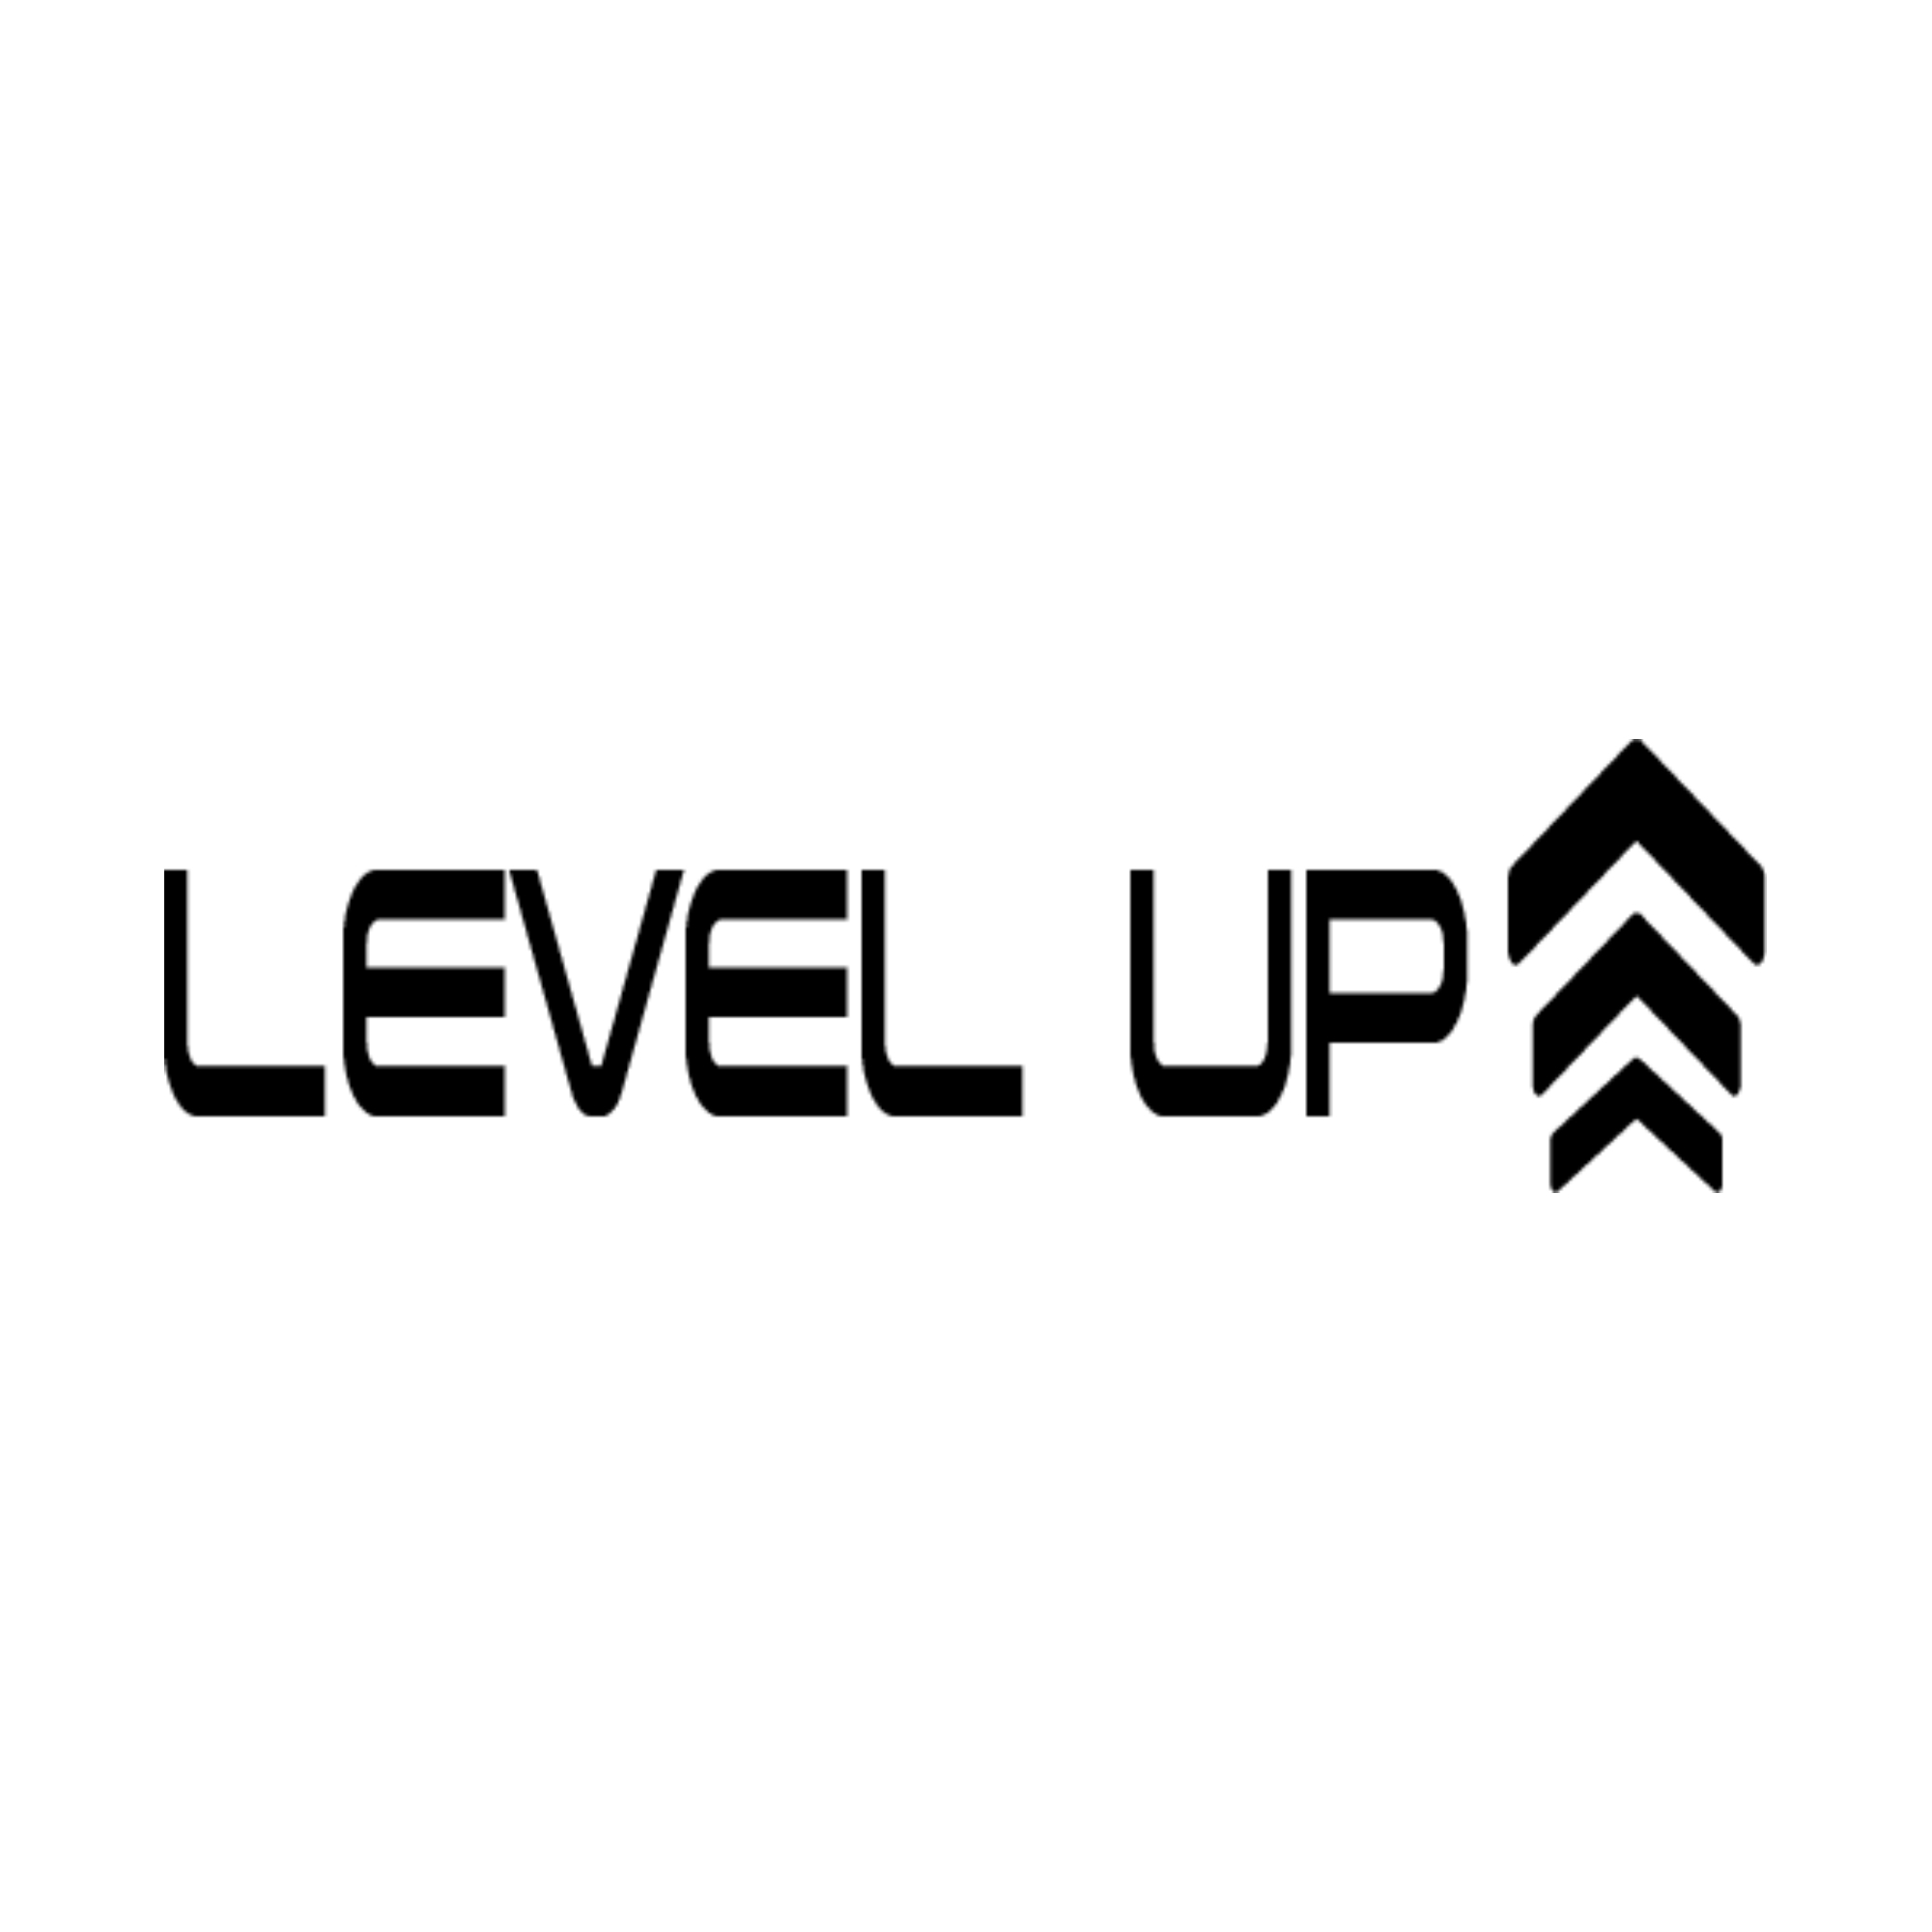 Level-up-haarlem-logo